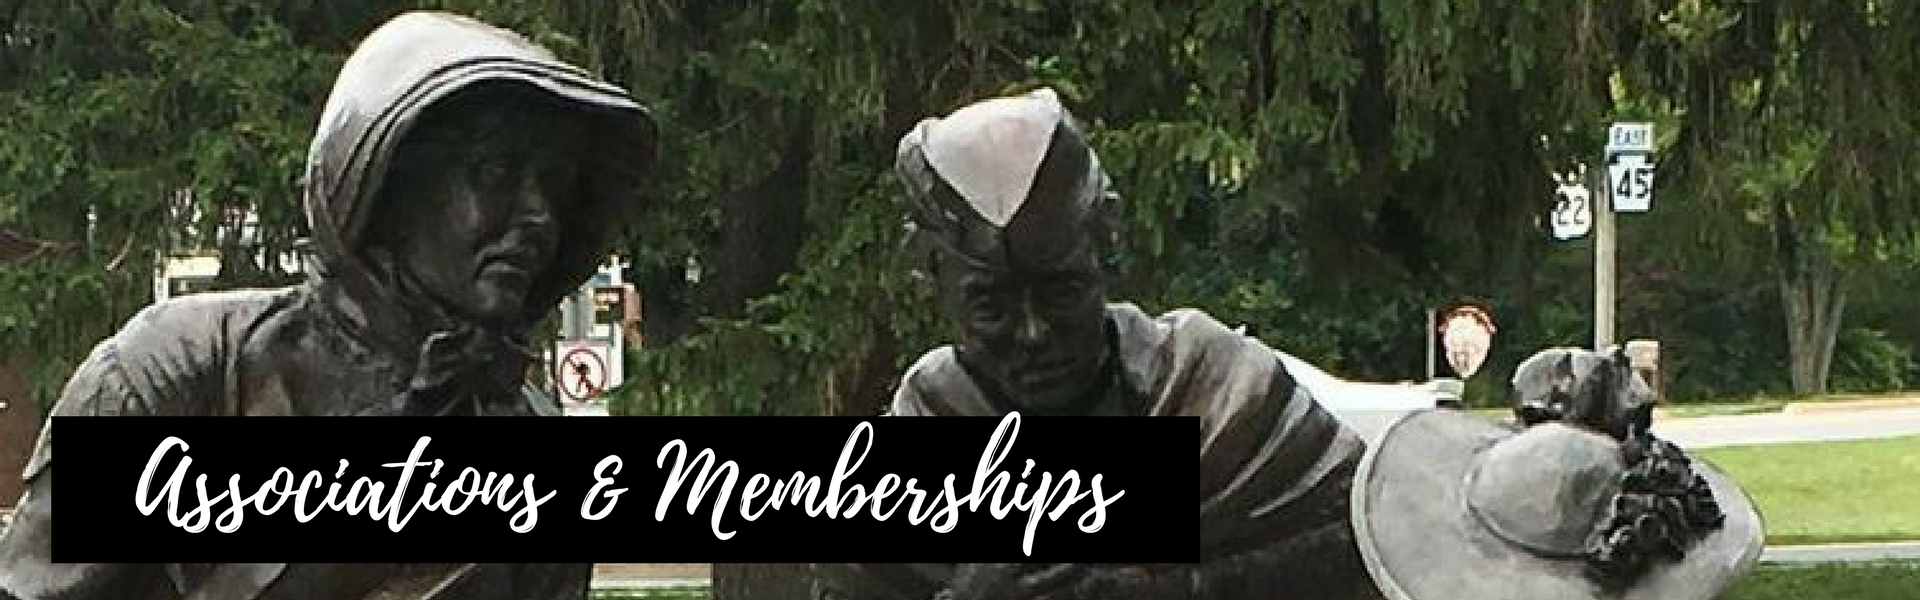 Website Banner - Associations & Memberships 